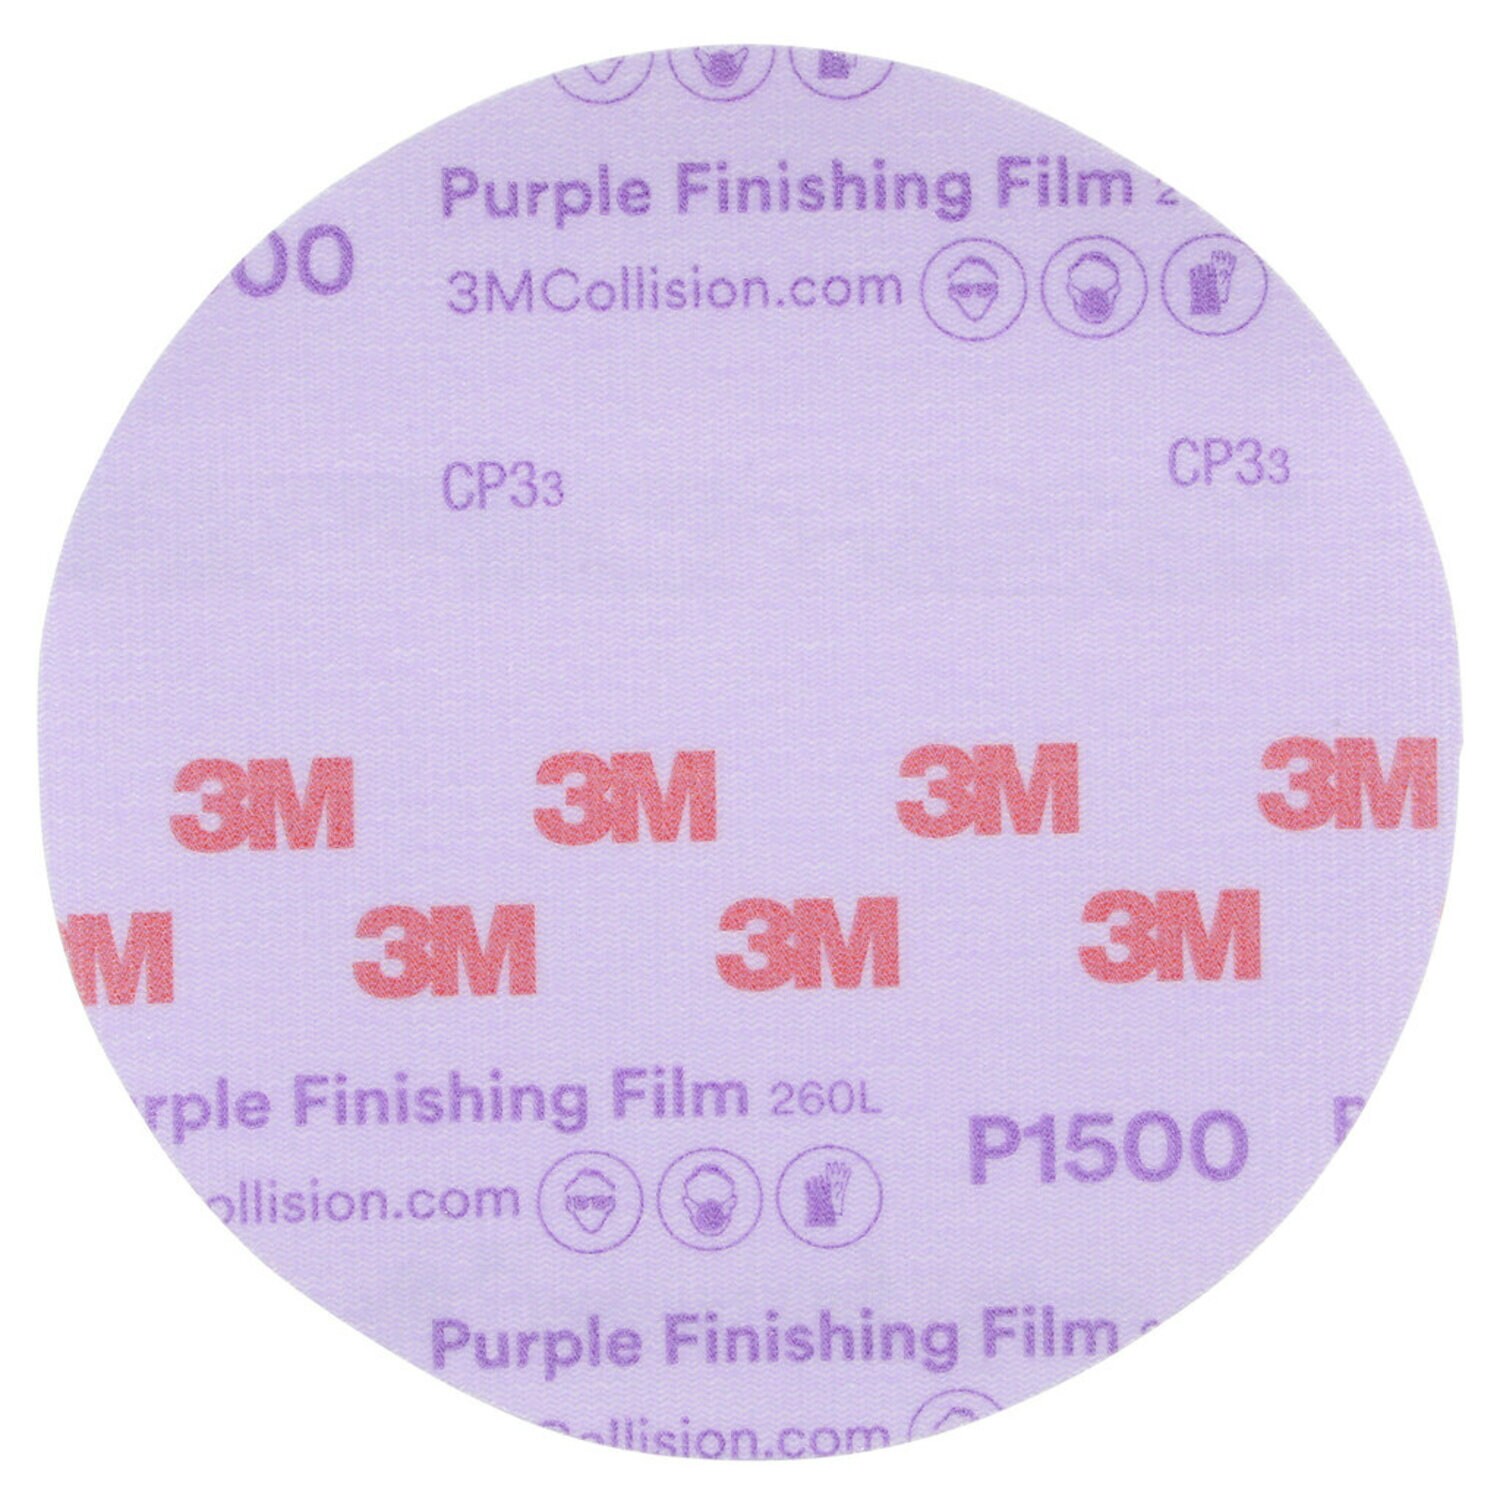 7100122795 - 3M Hookit Purple Finishing Film Abrasive Disc 260L, 30667, 6 in,
P1500, 50 discs per carton, 4 cartons per case